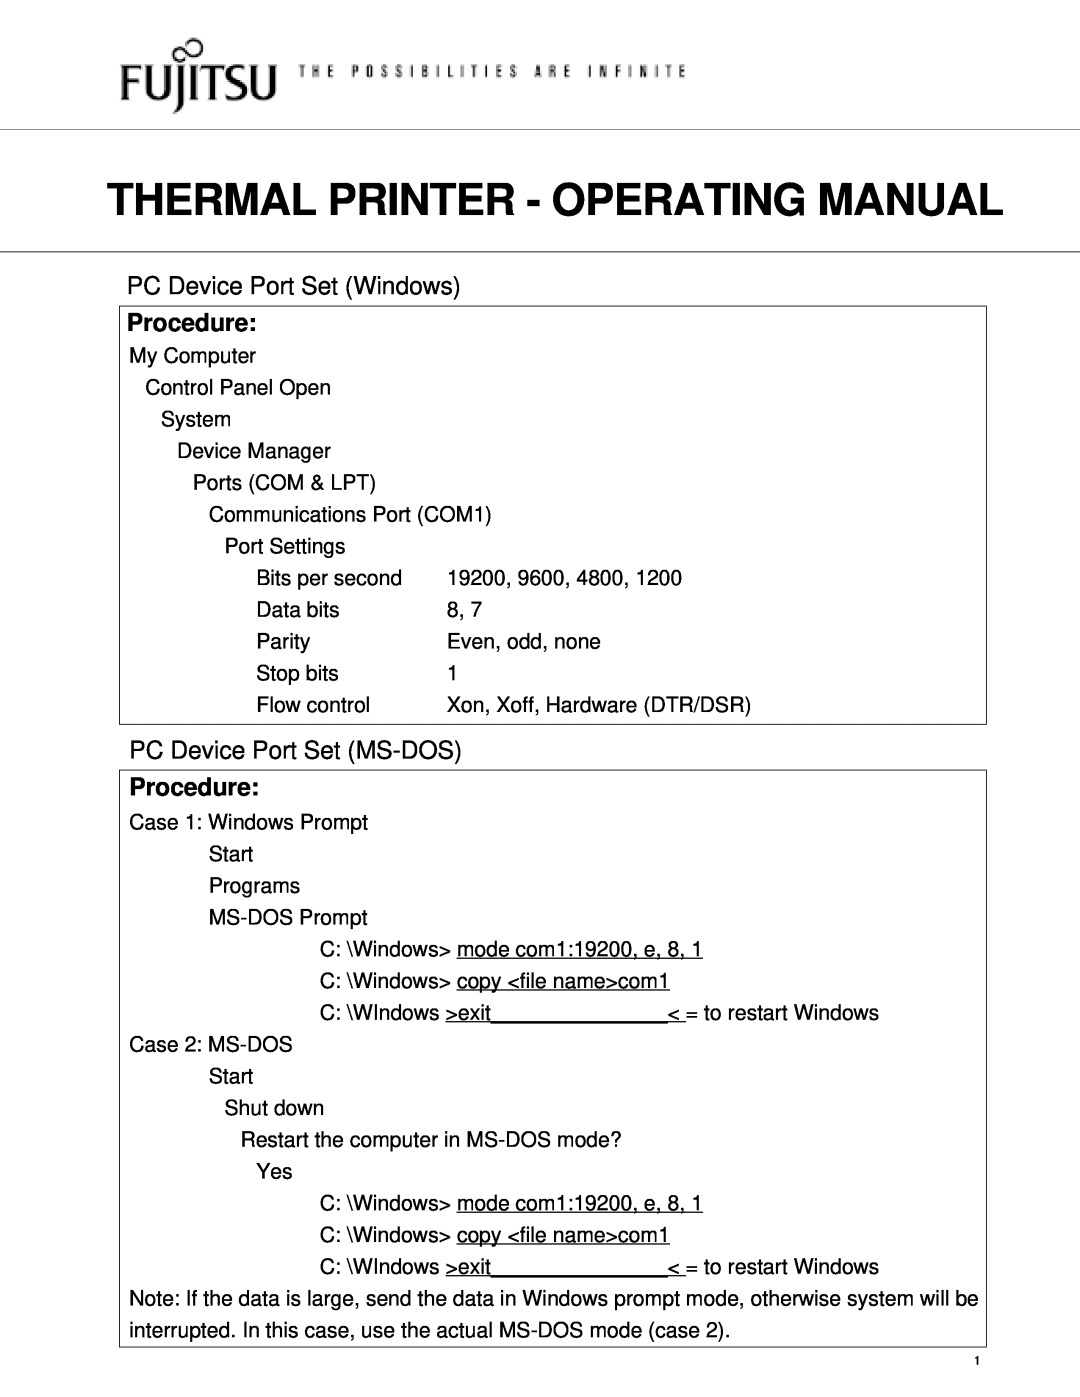 Fujitsu Printer manual PC Device Port Set Windows, Procedure, PC Device Port Set MS-DOS 